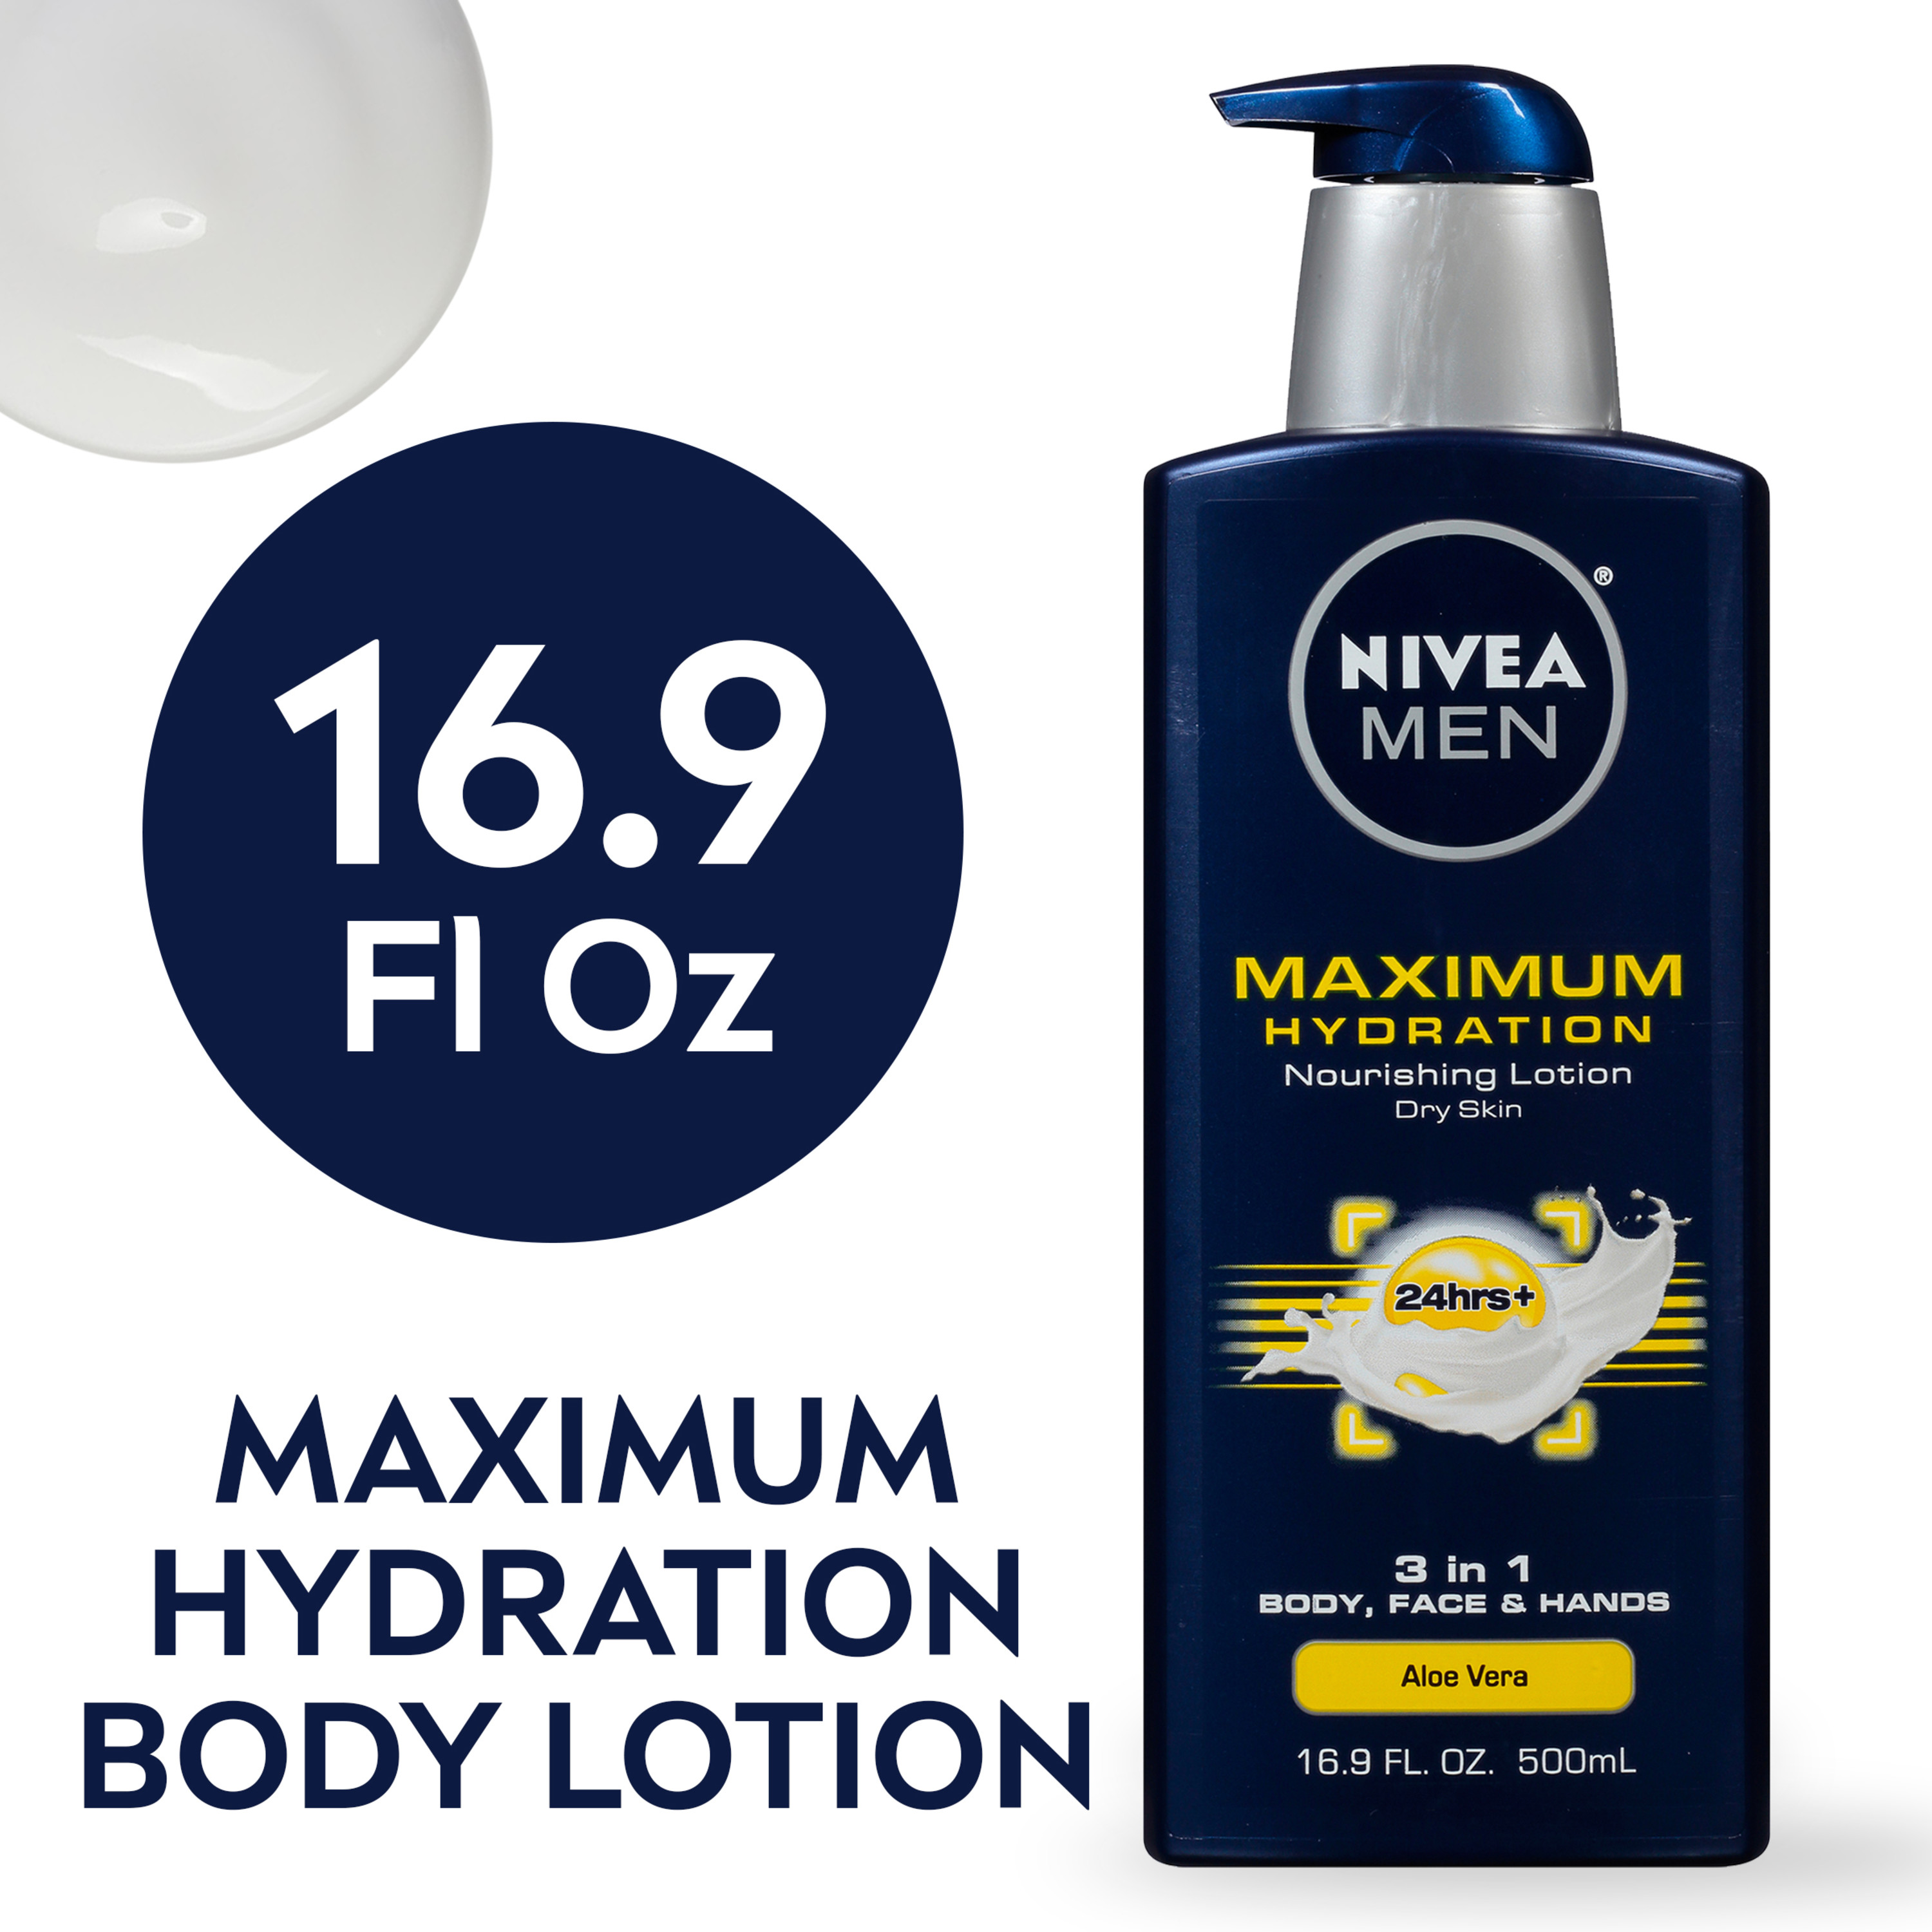 Nivea Men Maximum Hydration 3-in-1 Body Lotion for Dry Skin, 16.9 Fl oz Bottle - image 1 of 10